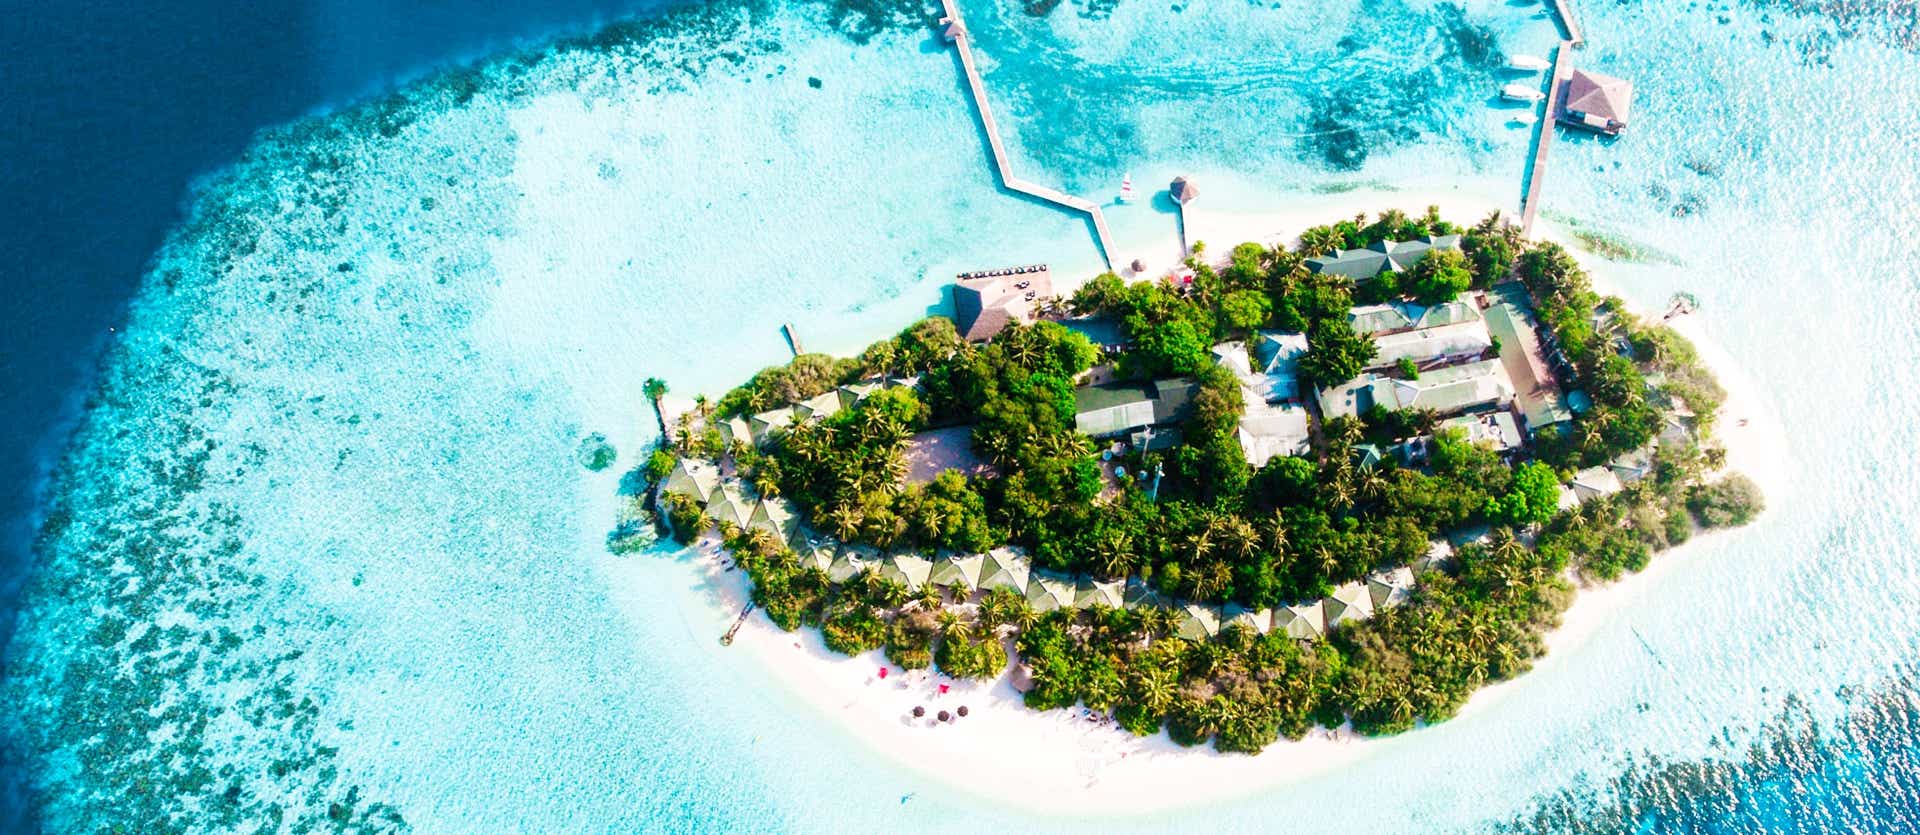 Eriyadu Island Resort <span class="iconos separador"></span> Maldivas